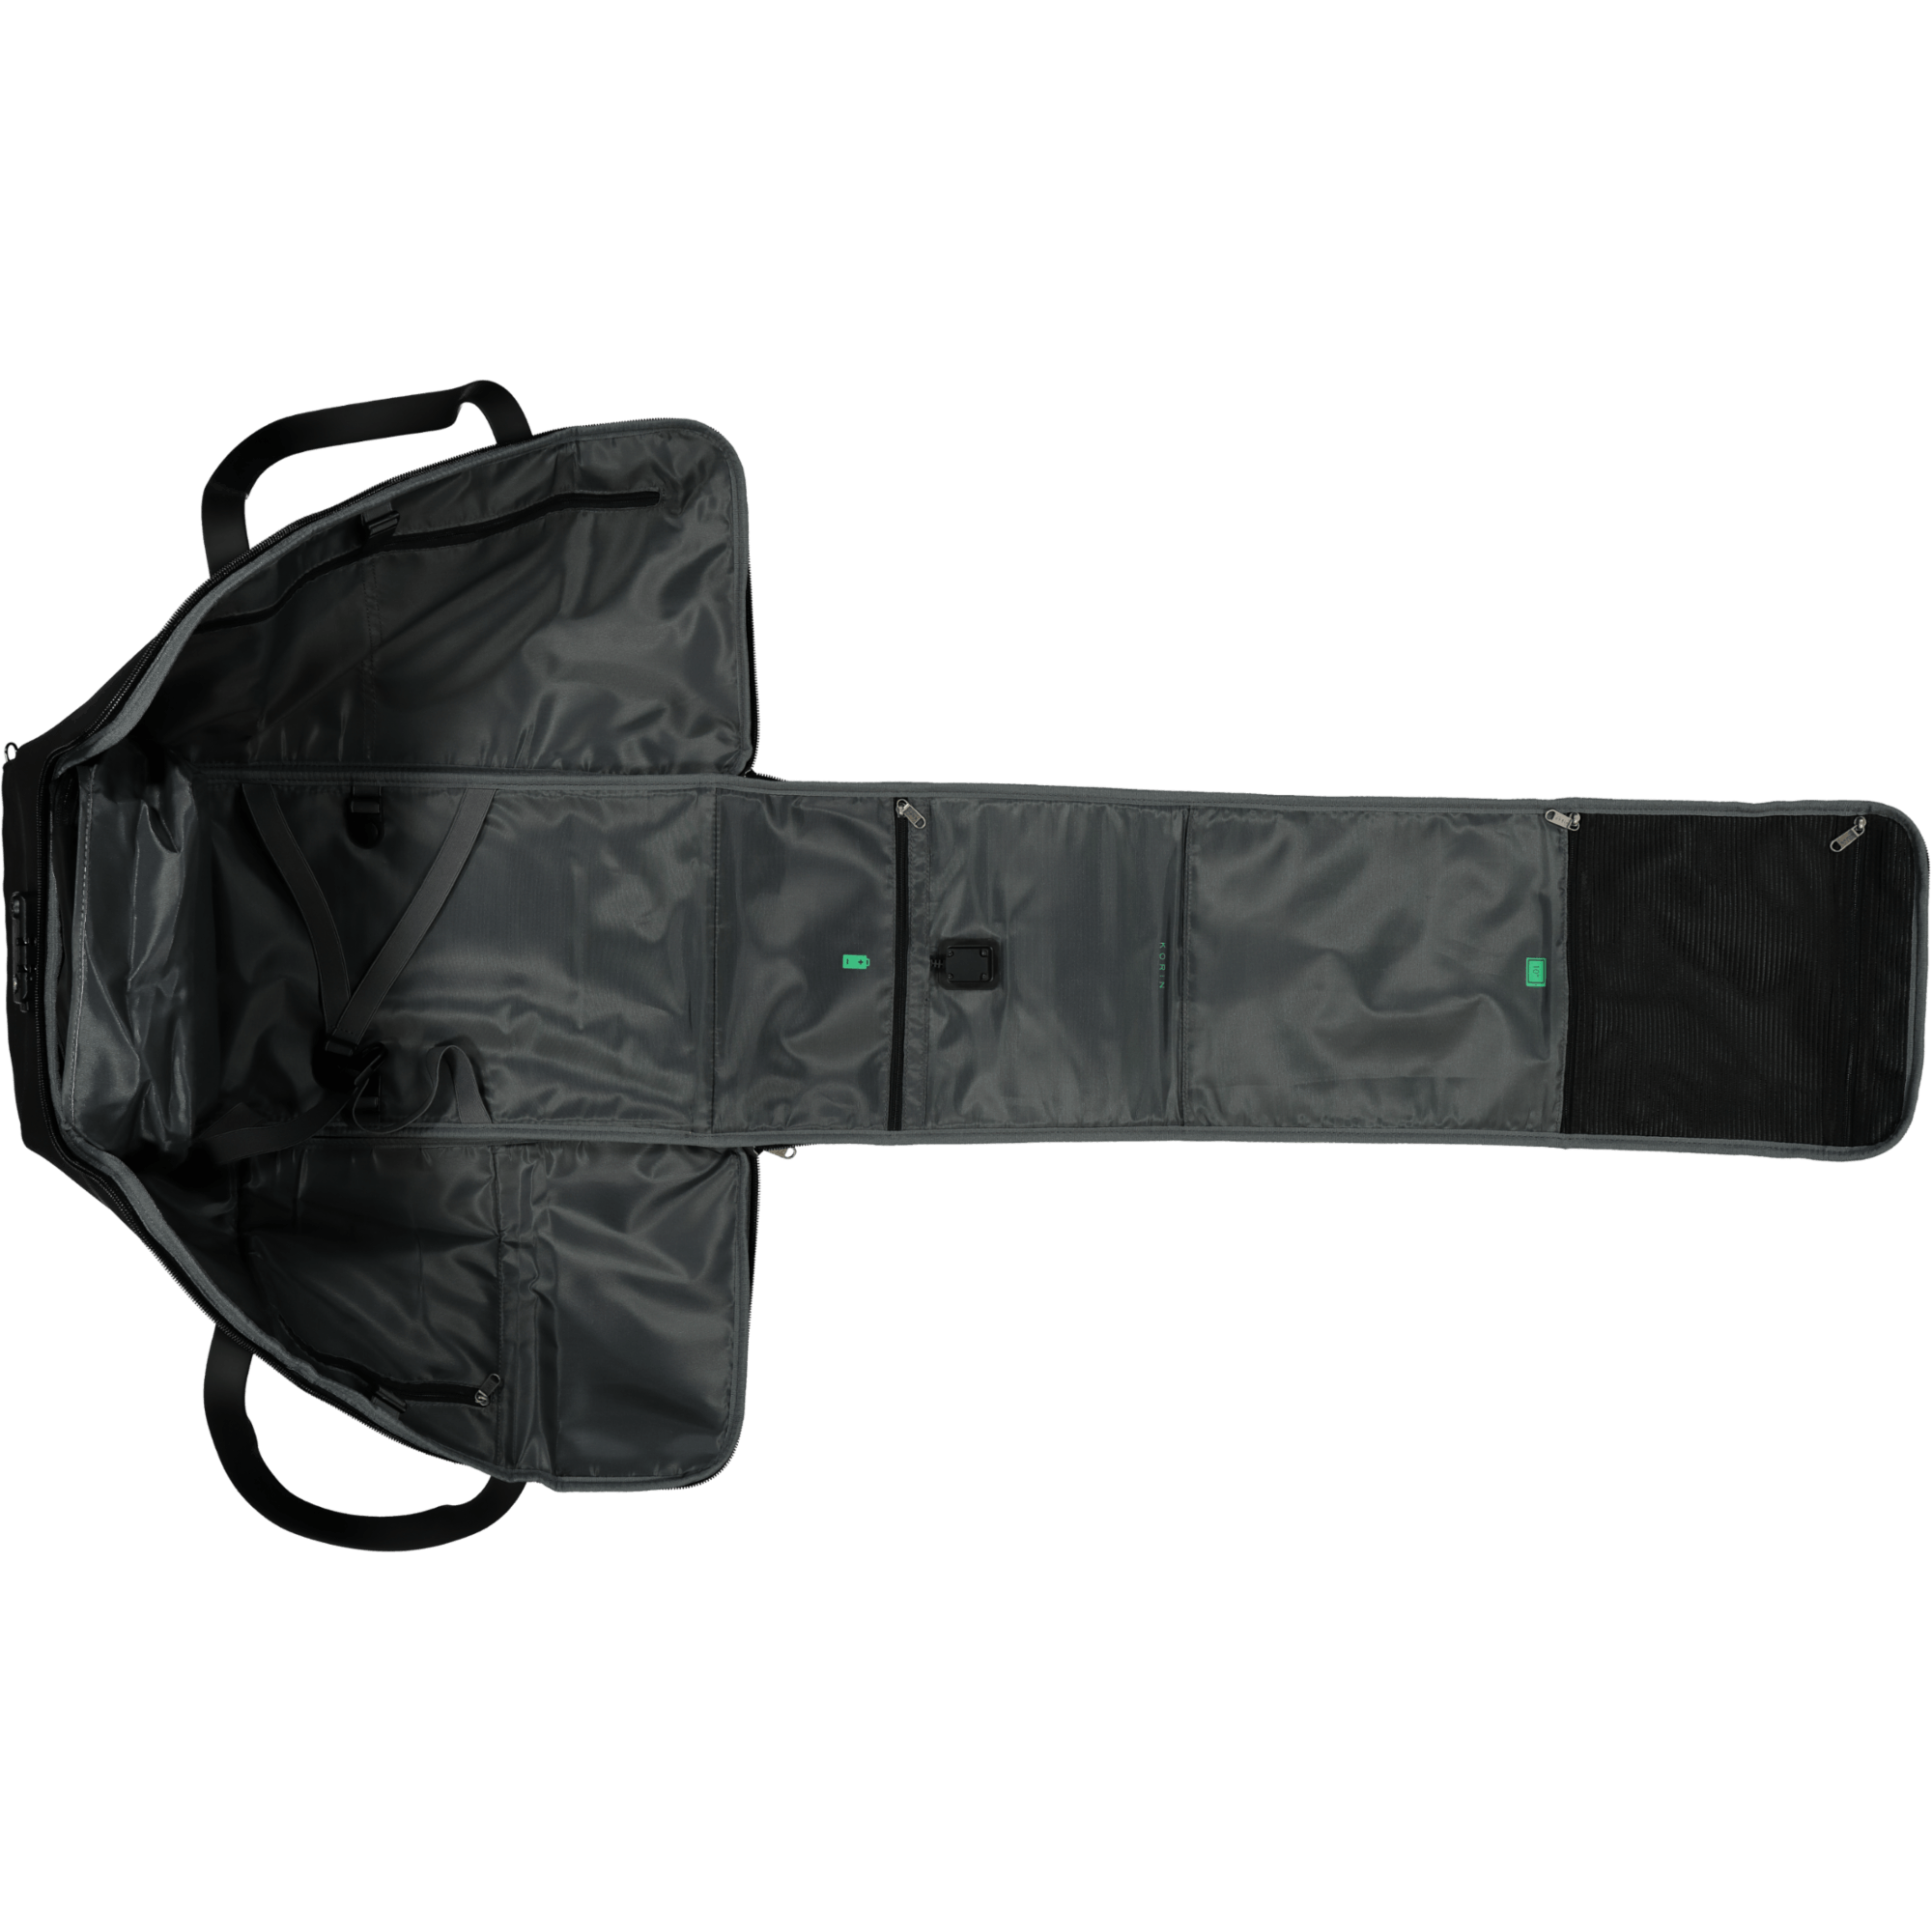 Korin Flexpack Go Duffle Bag Charcoal/Black | Culture Kings US